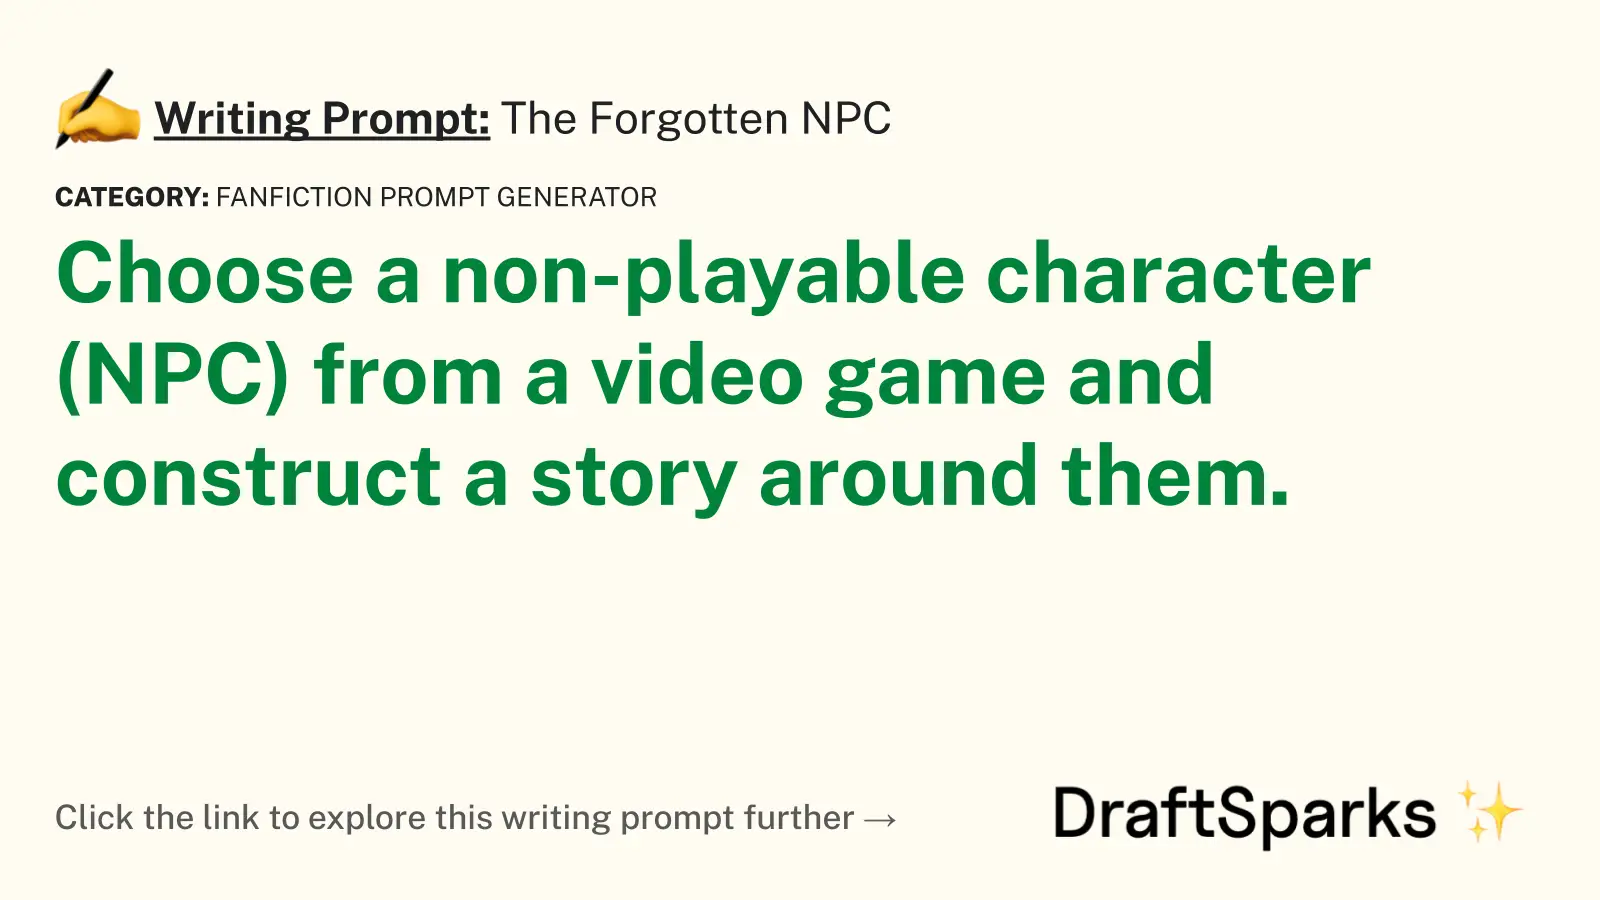 The Forgotten NPC